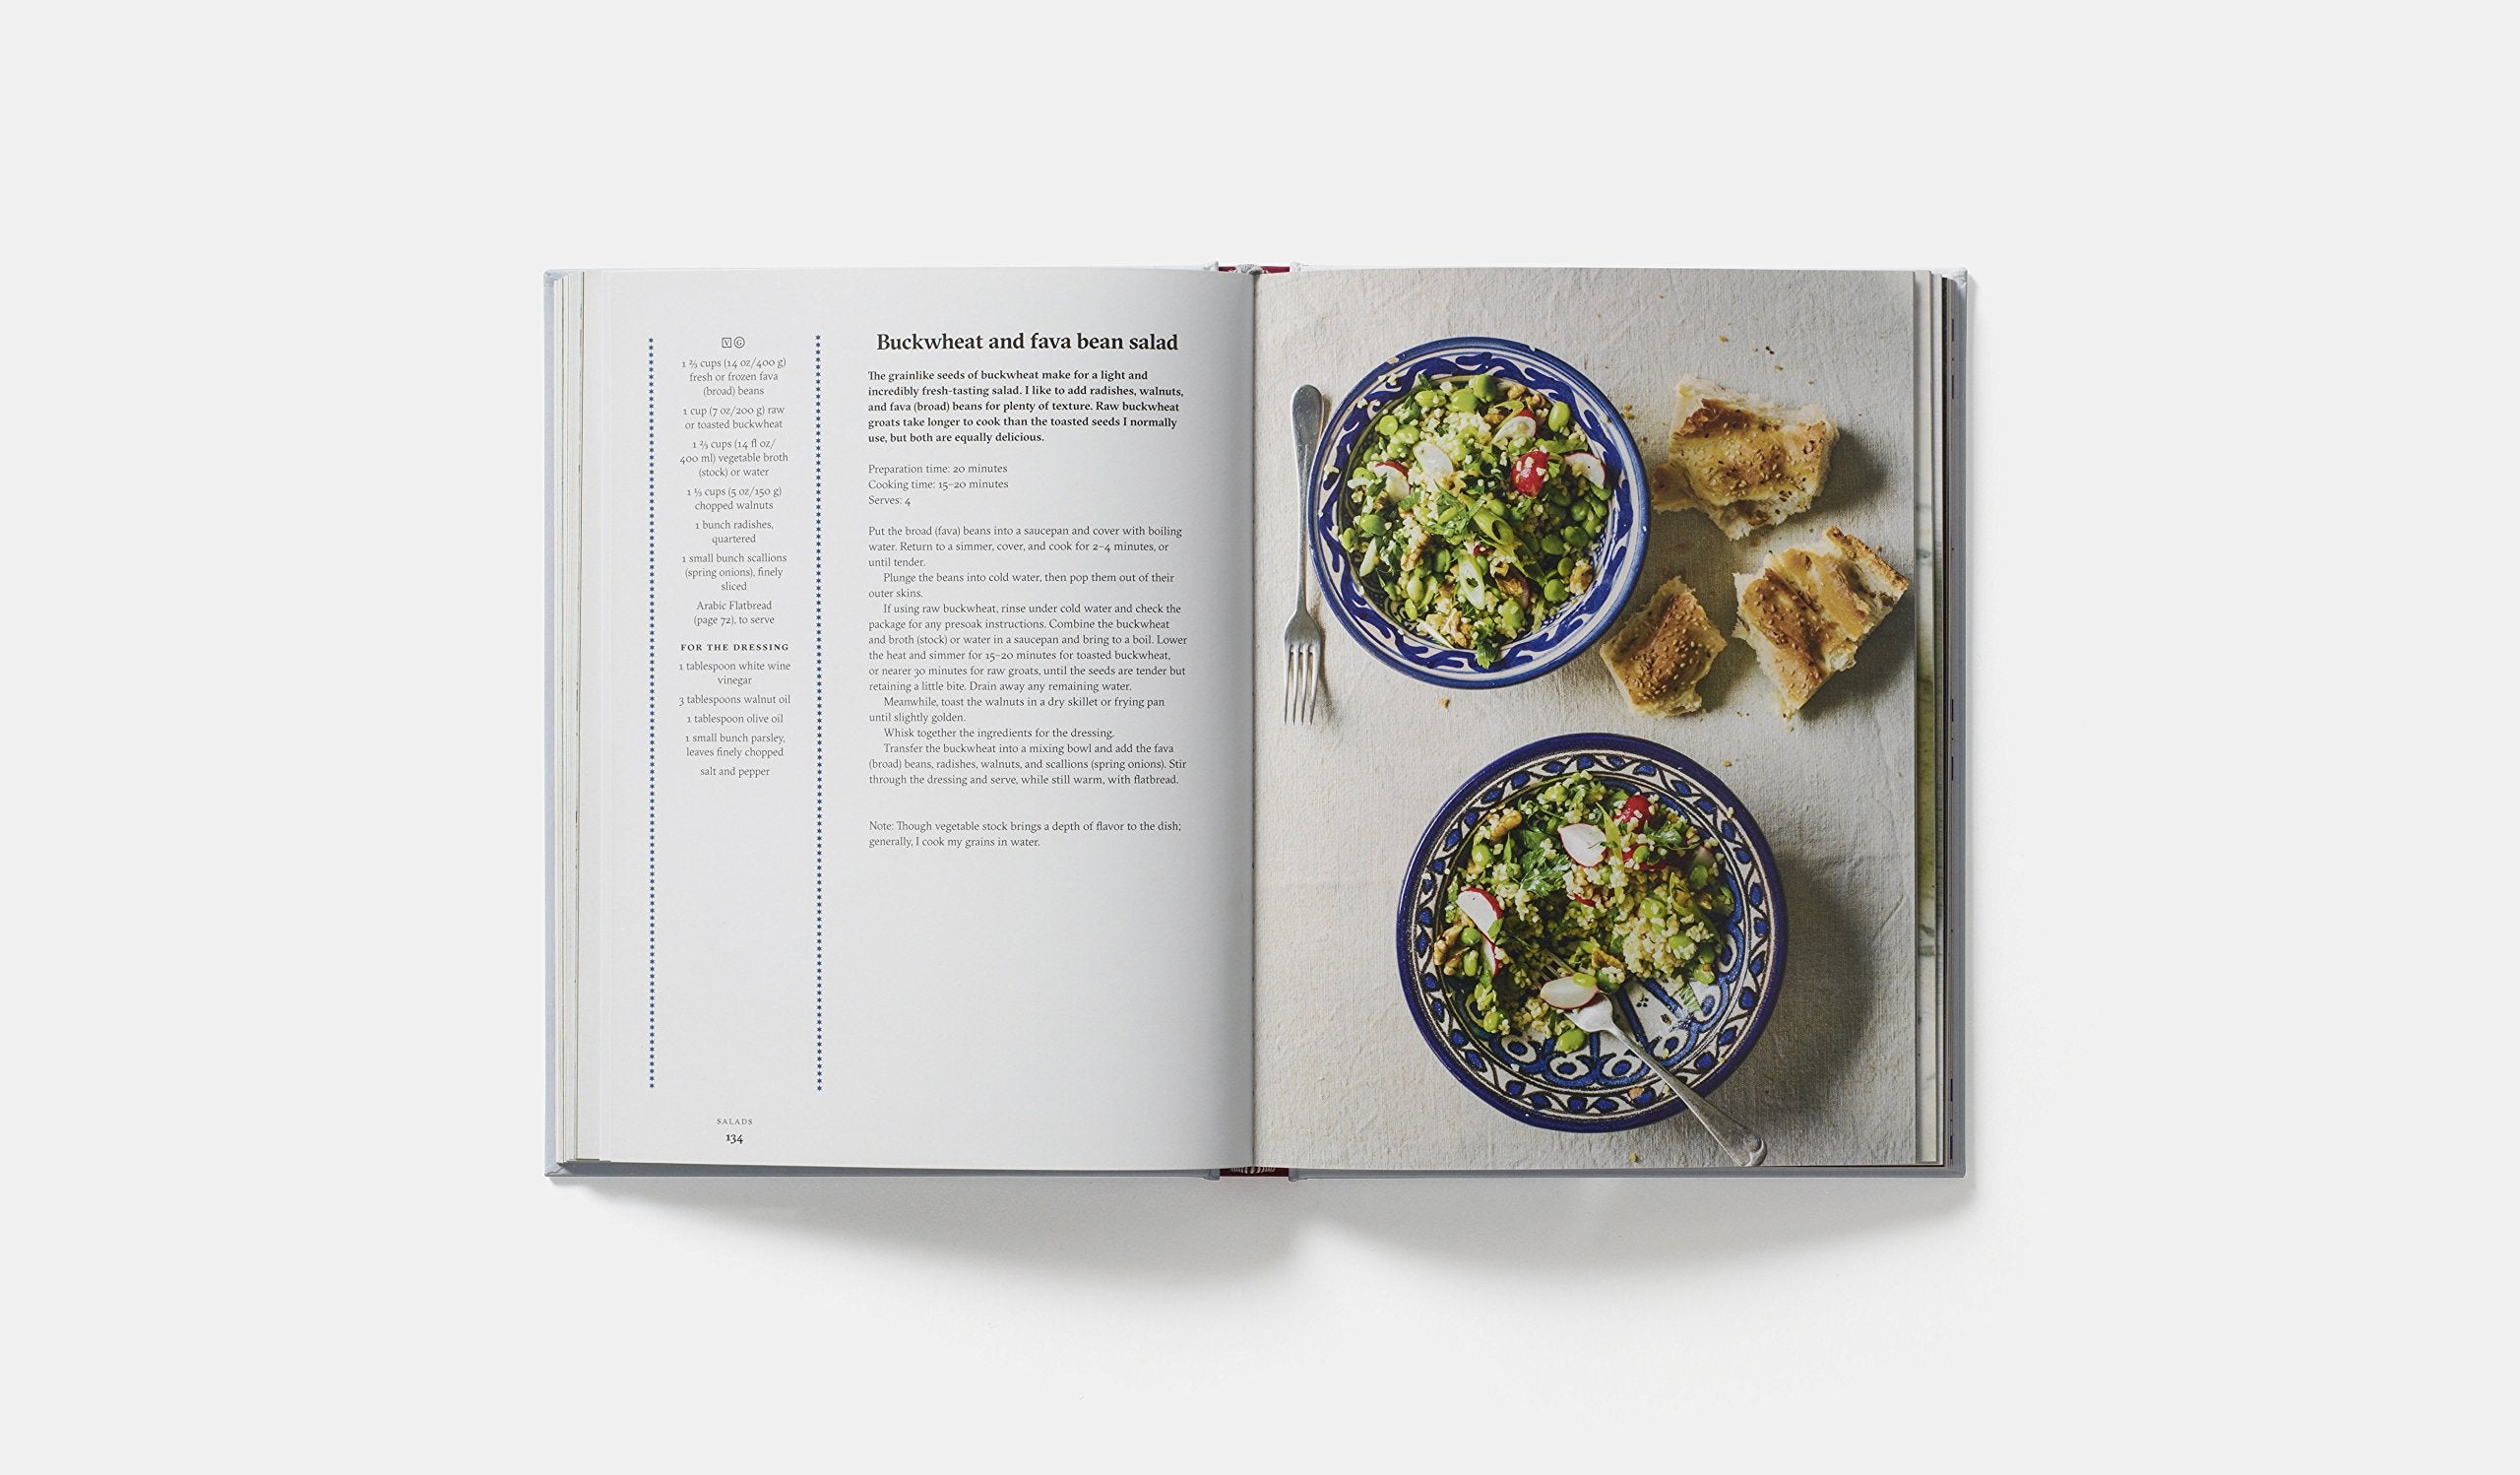 The Middle Eastern Vegetarian Cookbook (Salma Hage)